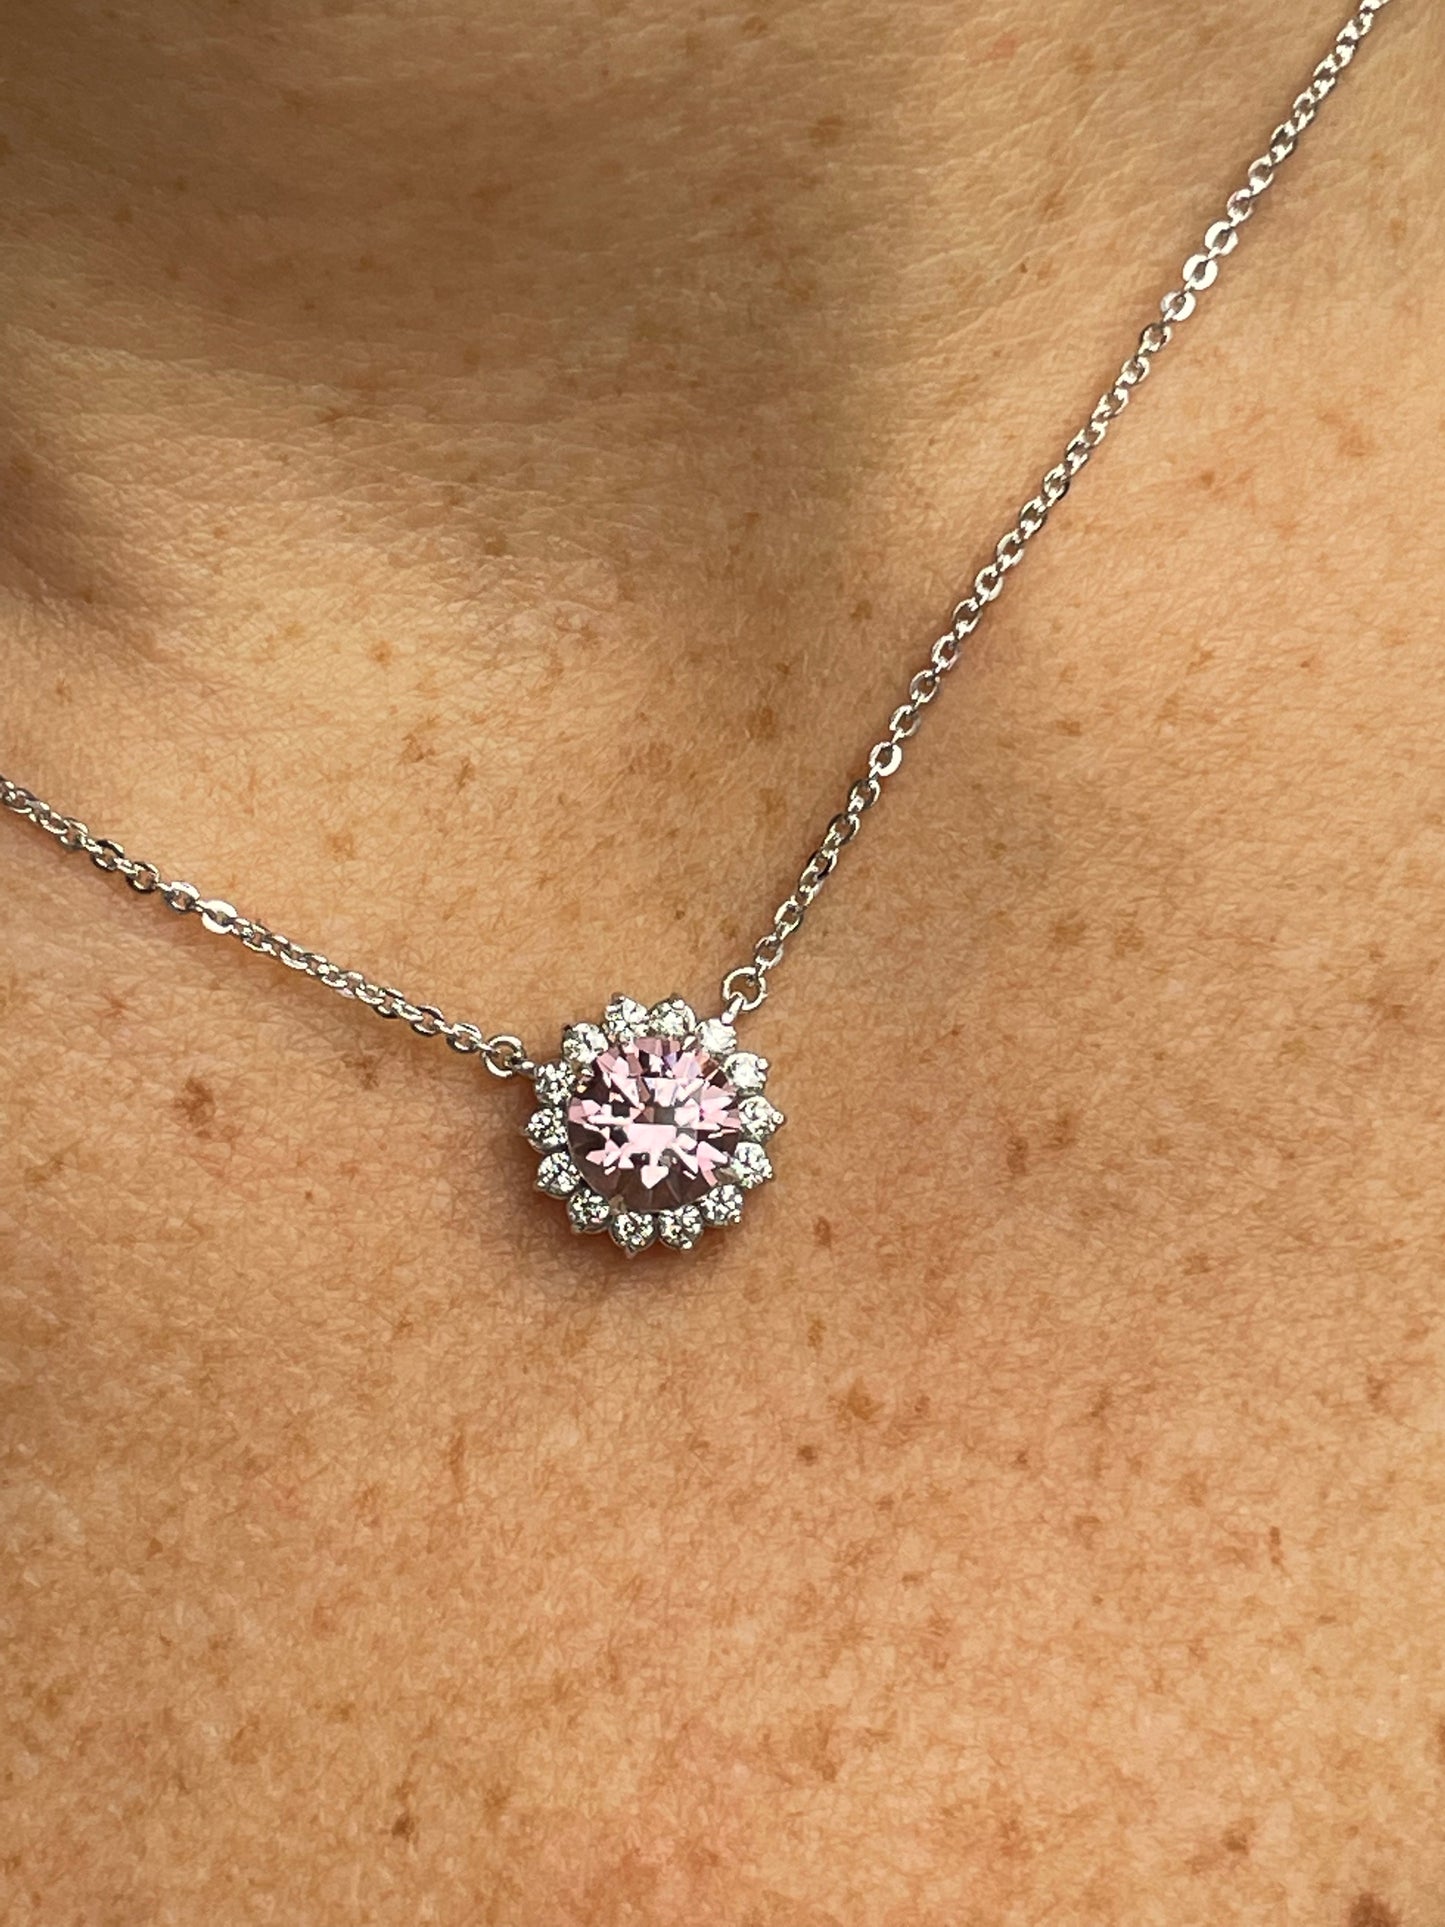 Pink Tourmaline Necklace Diamond Accents